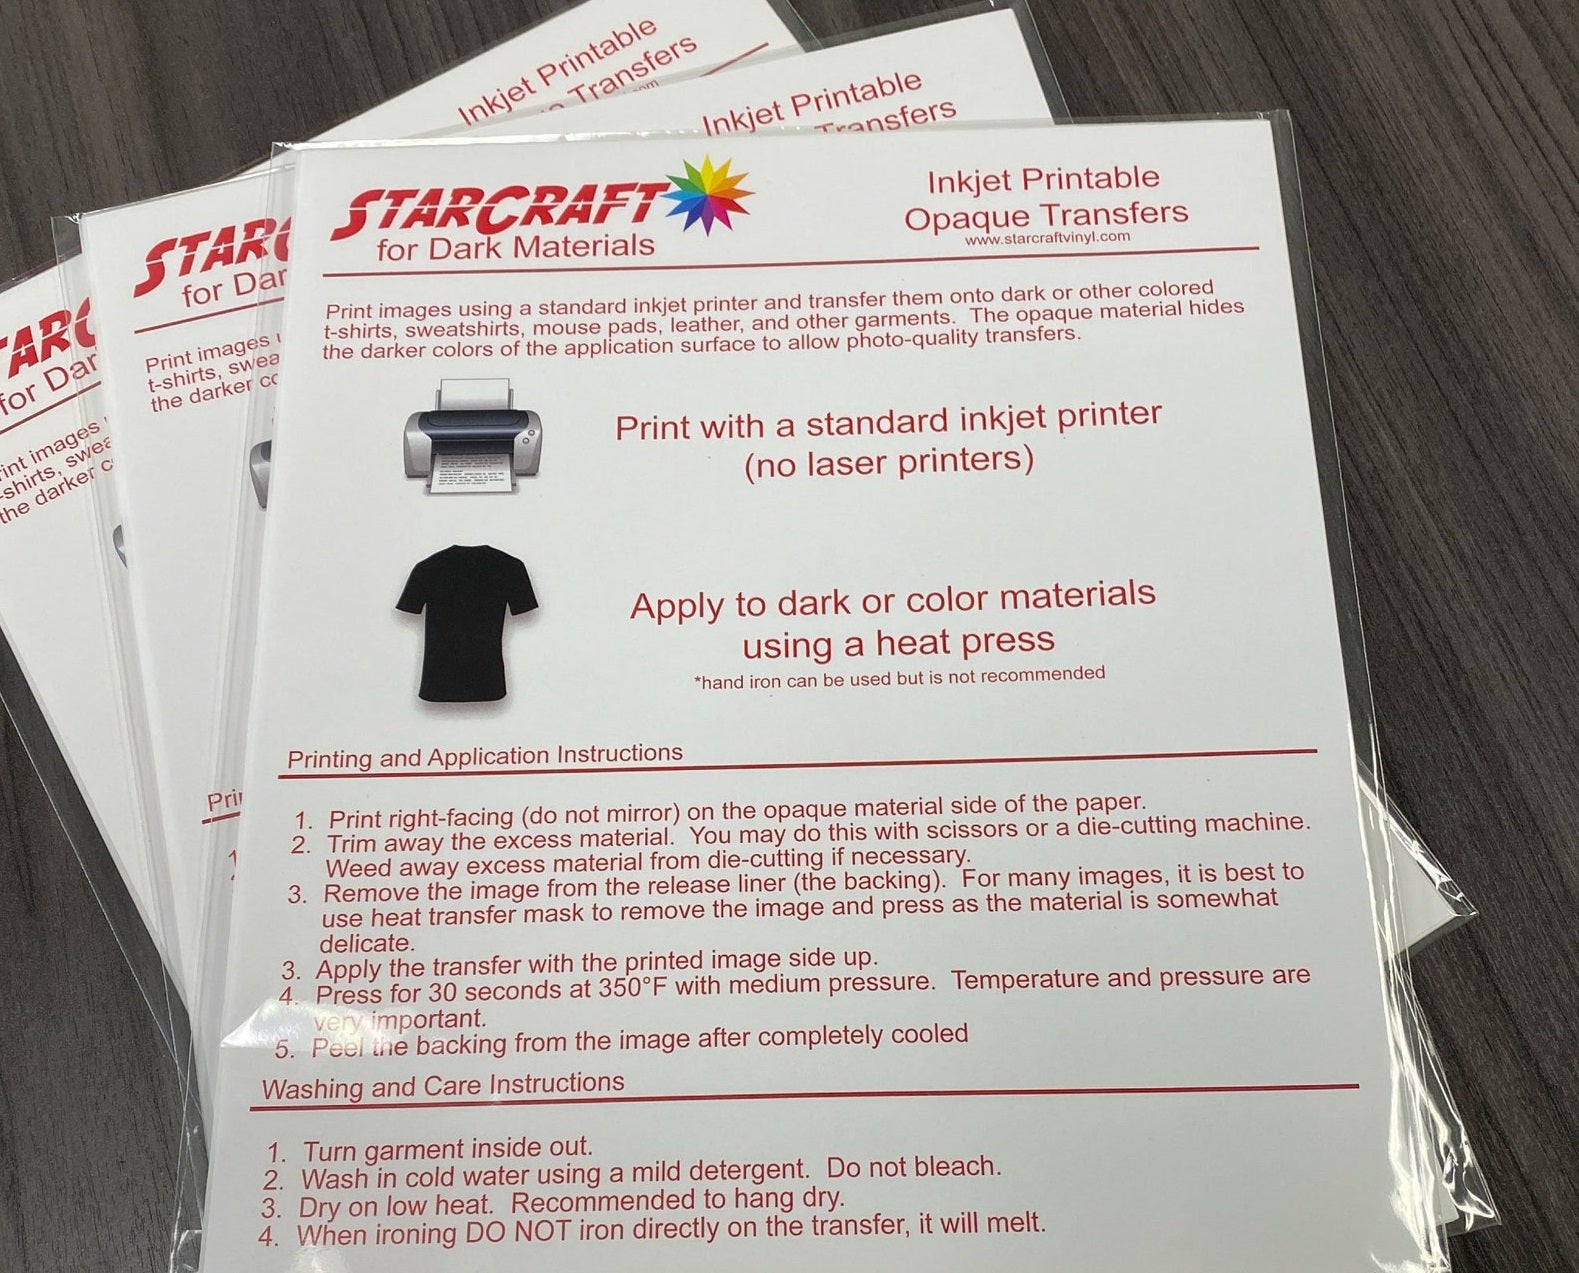 StarCraft Printable Inkjet Ironon Transfer The Vinyl Shop, LLC